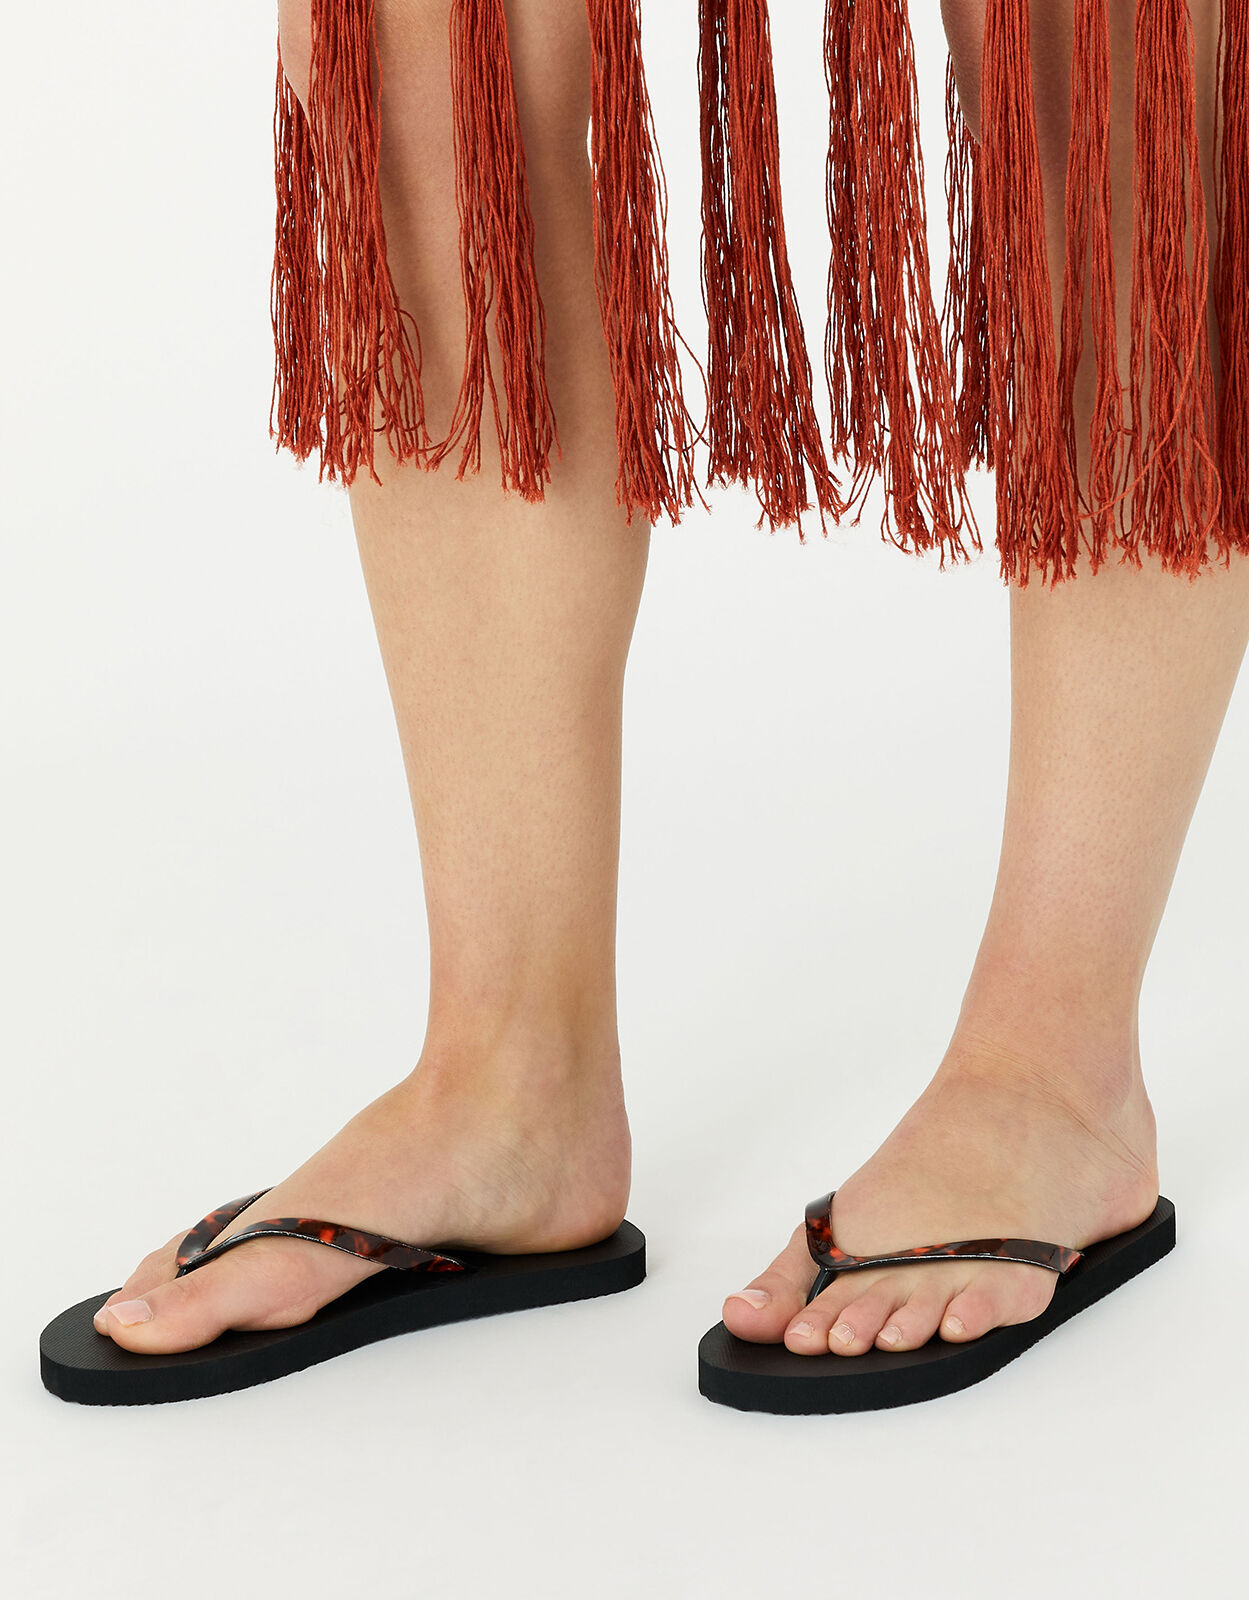 Flip Flops Accessories Flip Flops Support Schoenen damesschoenen Sandalen Slippers & Teenslippers Simplicity Black Sandal Harness Flip Flop Back Straps 